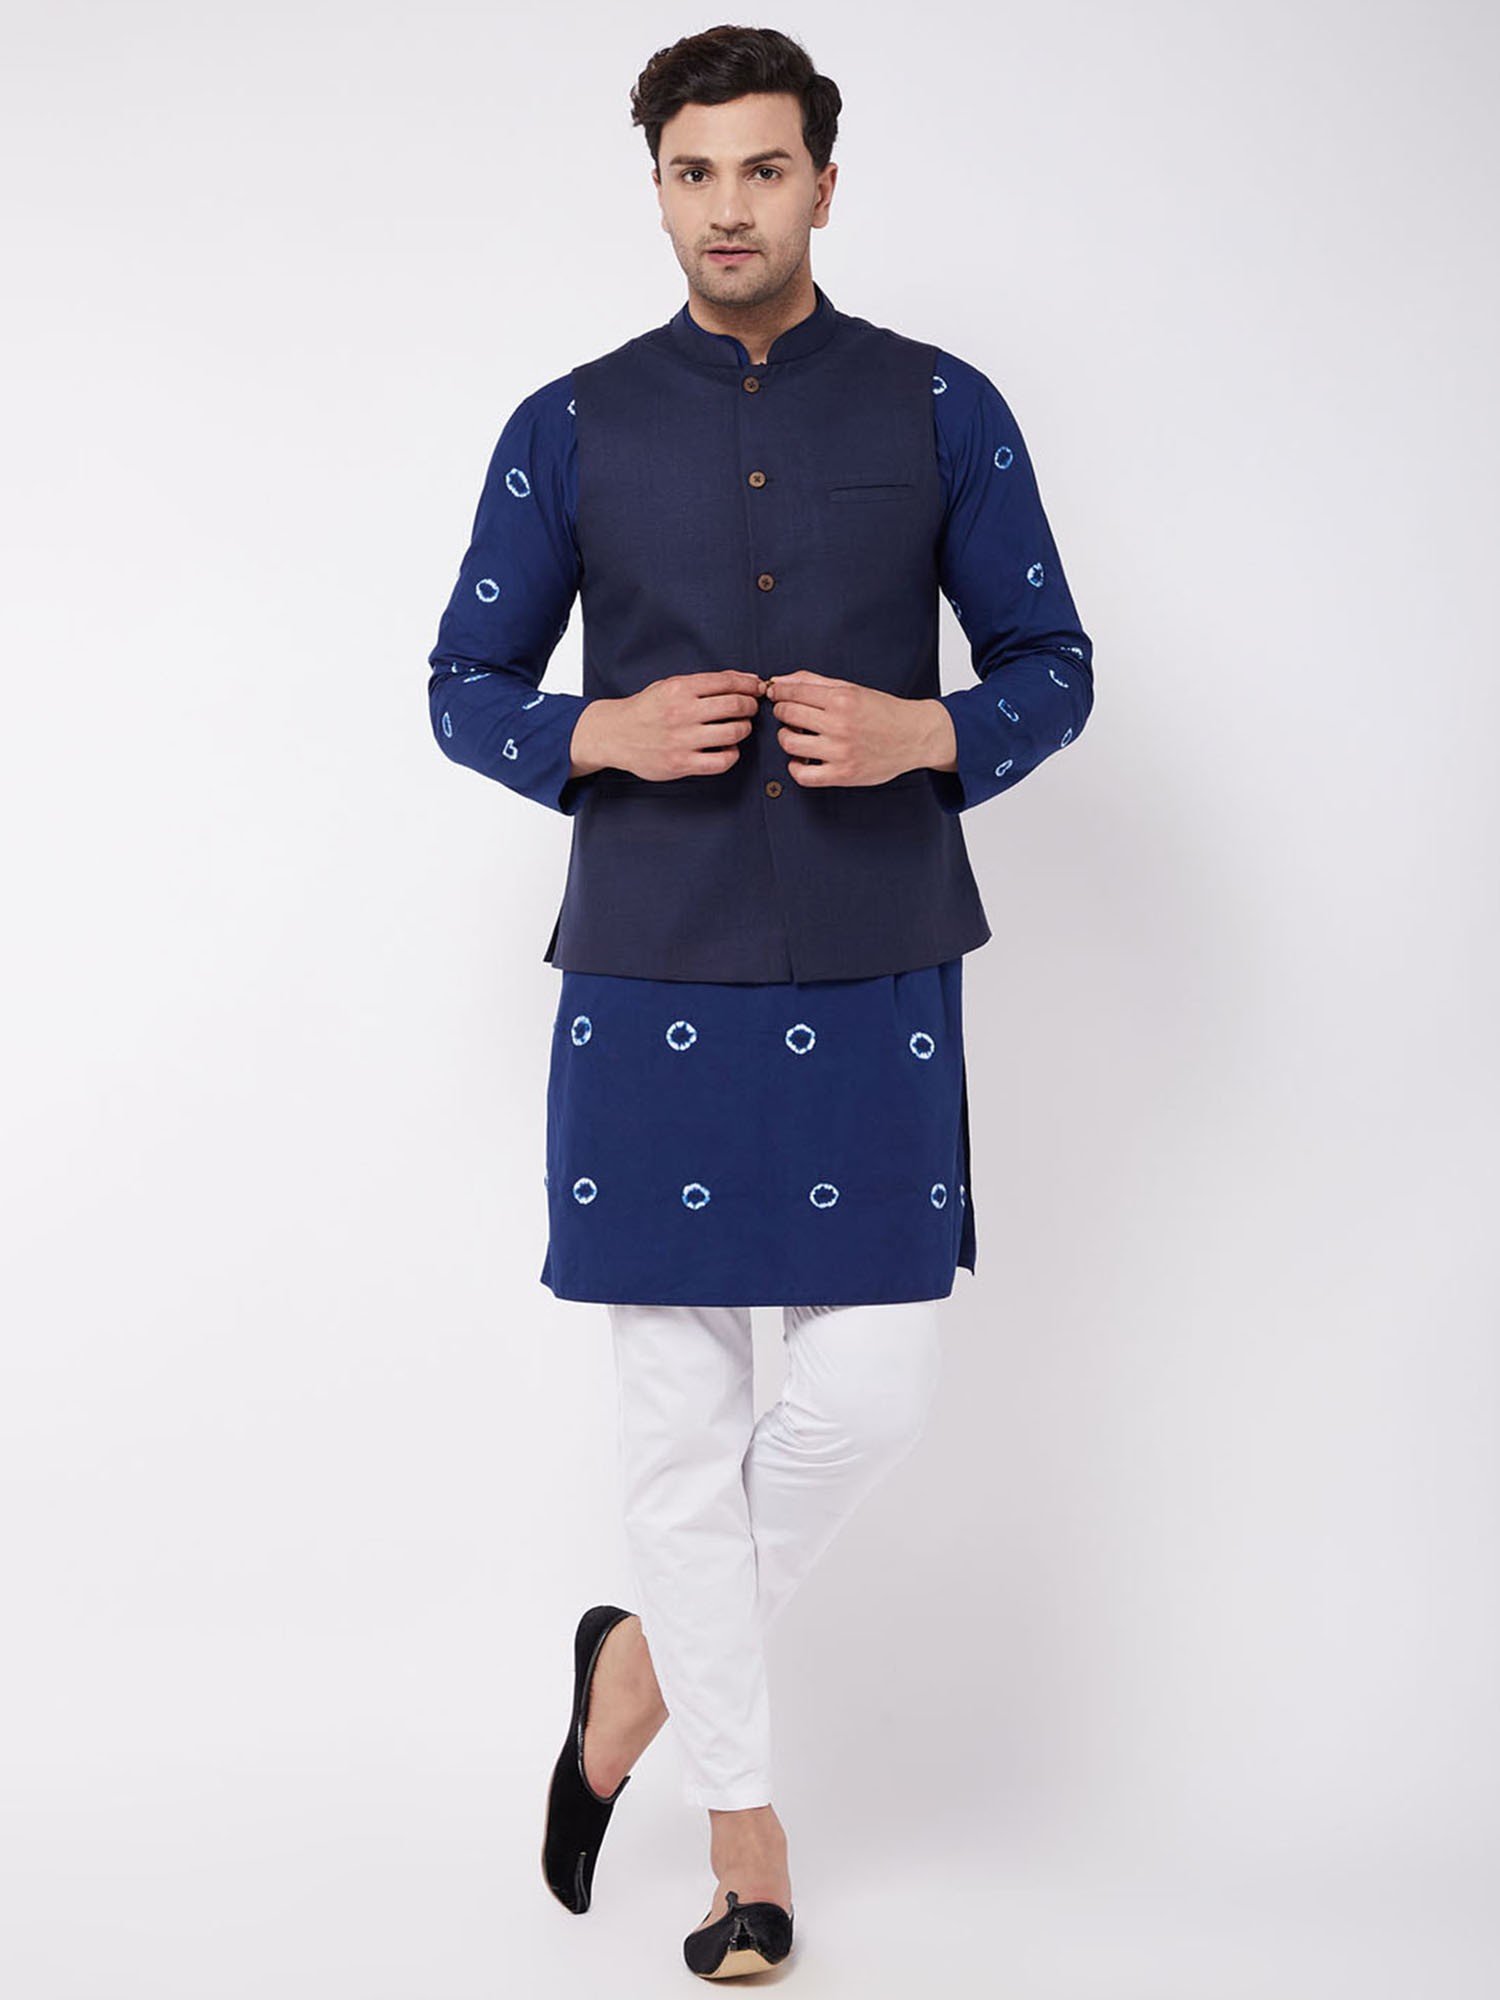 Buy MANOXO Cotton Blend Nehru/Modi Jacket - Waist Coat for Men Pack of 2 at  Amazon.in